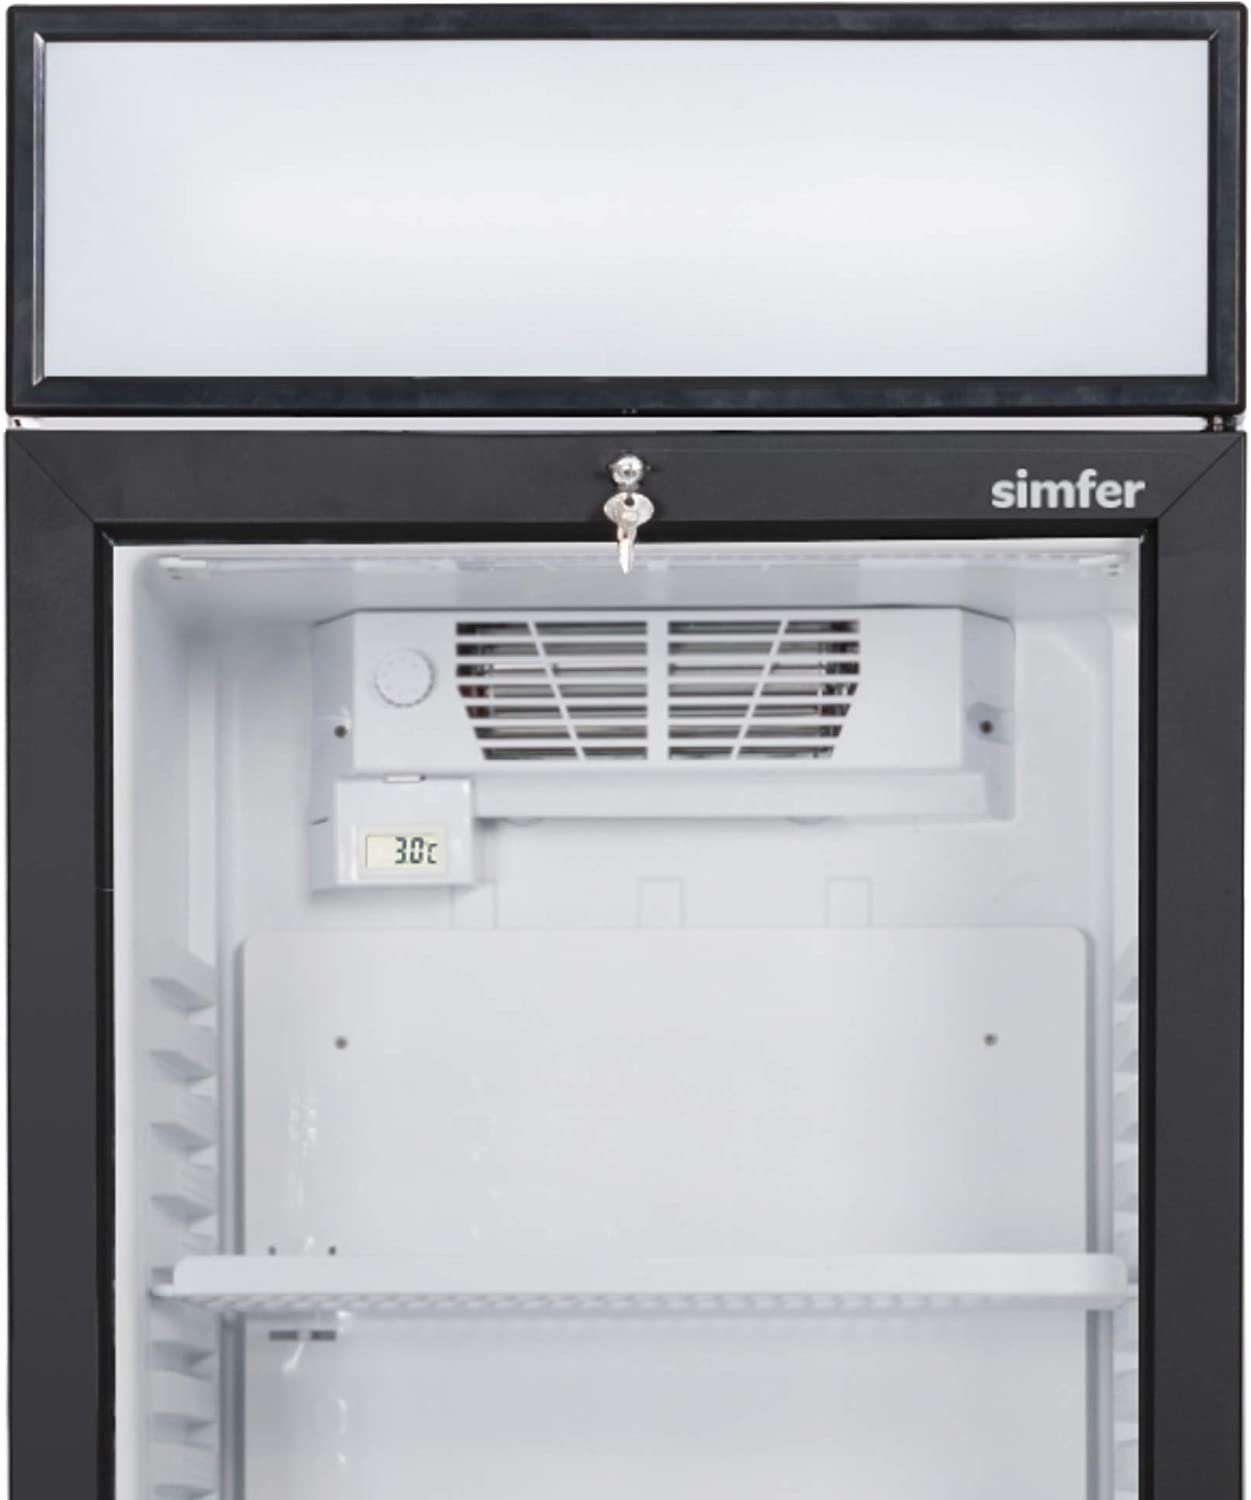 Simfer Getränkekühlschrank SDS 385 DC CF, L, breit, hoch, 60 358 cm 200 1 LED-Display, Self-Closing cm Glastür